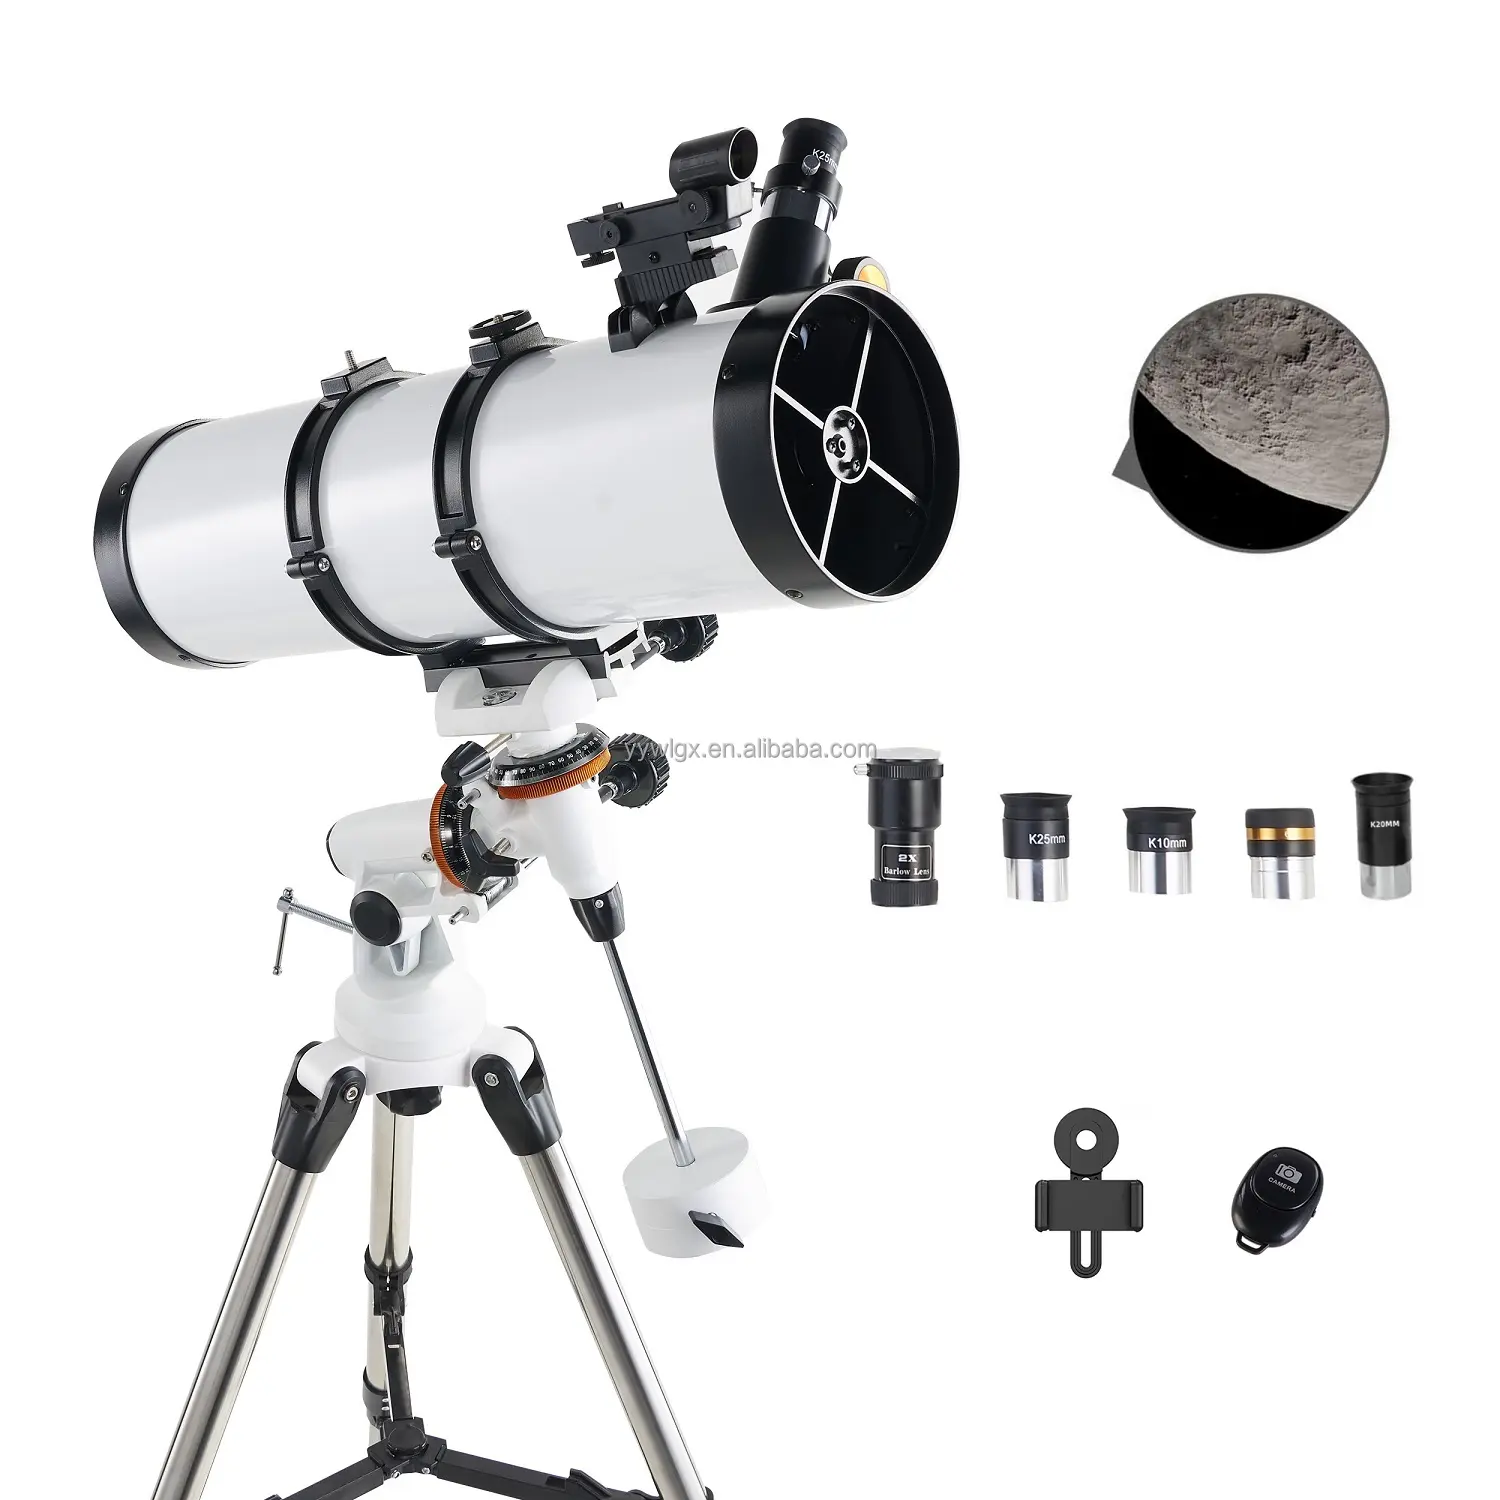 Telescope 130mm Aperture/ 650mm focal length Astronomic Telescopio Fully Multi-coated High Transmission Coatings